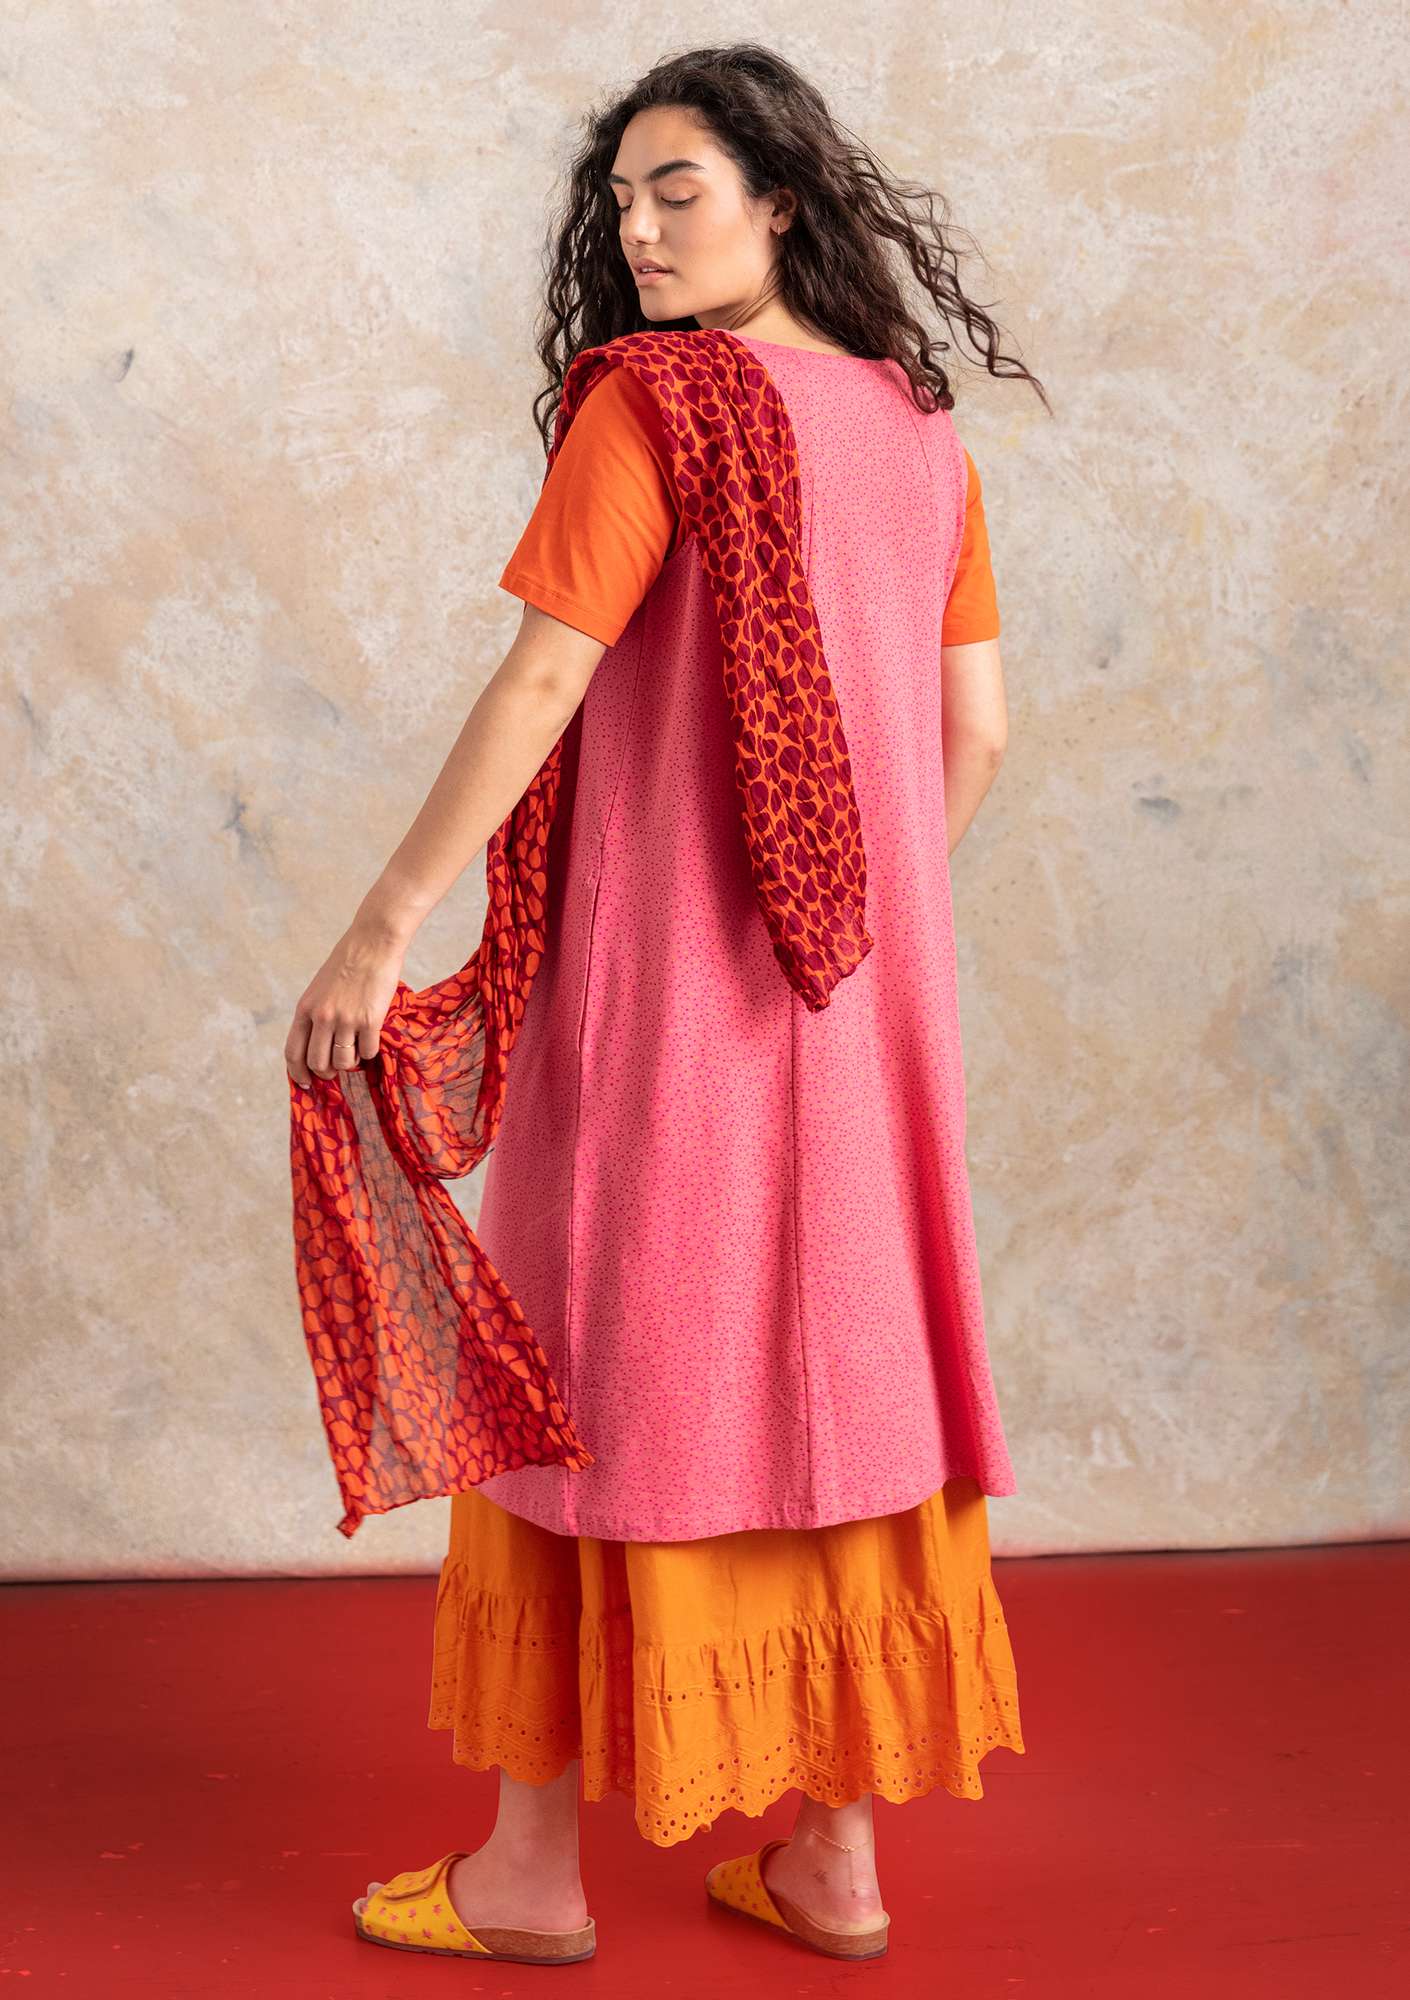 “Iliana” jersey dress in organic cotton/spandex flamingo/patterned thumbnail